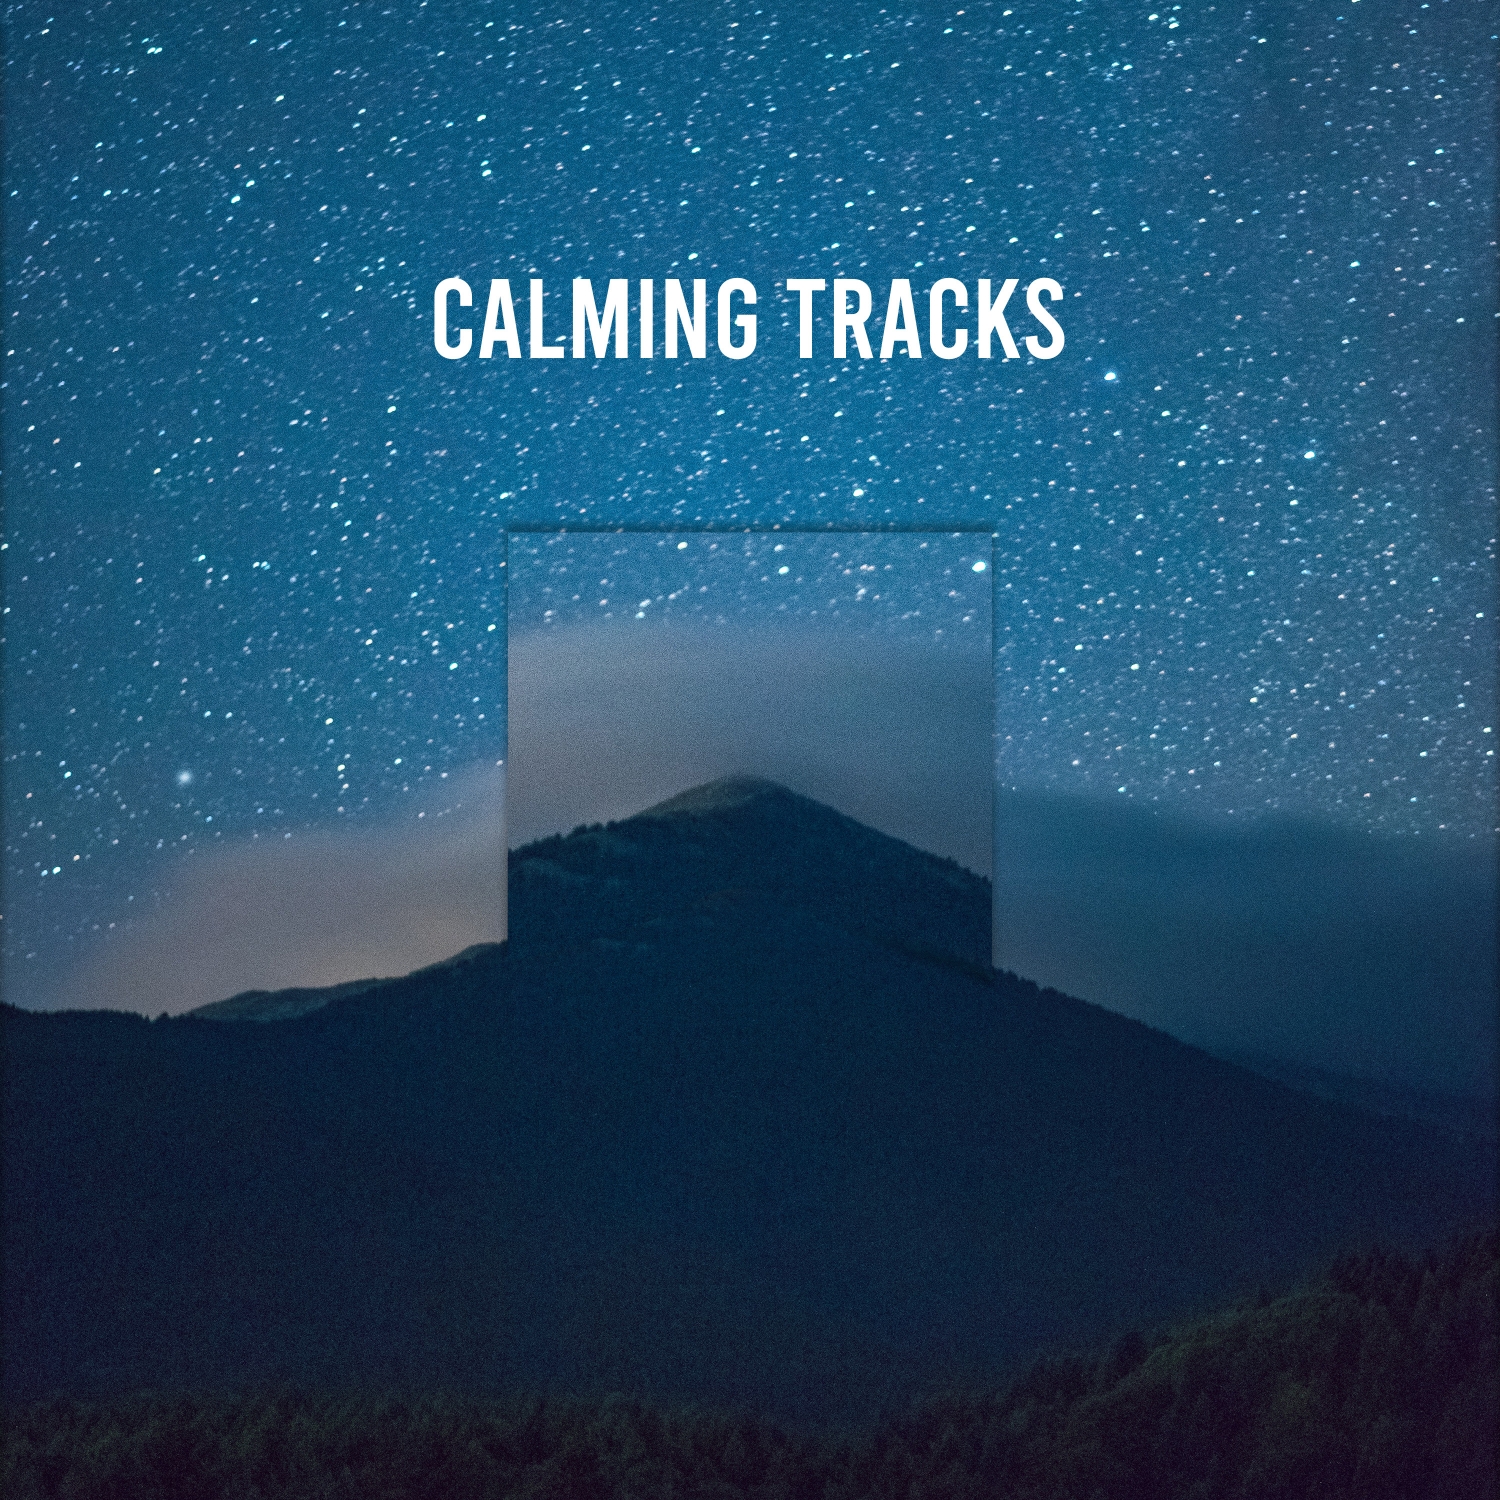 18 Calming Tracks